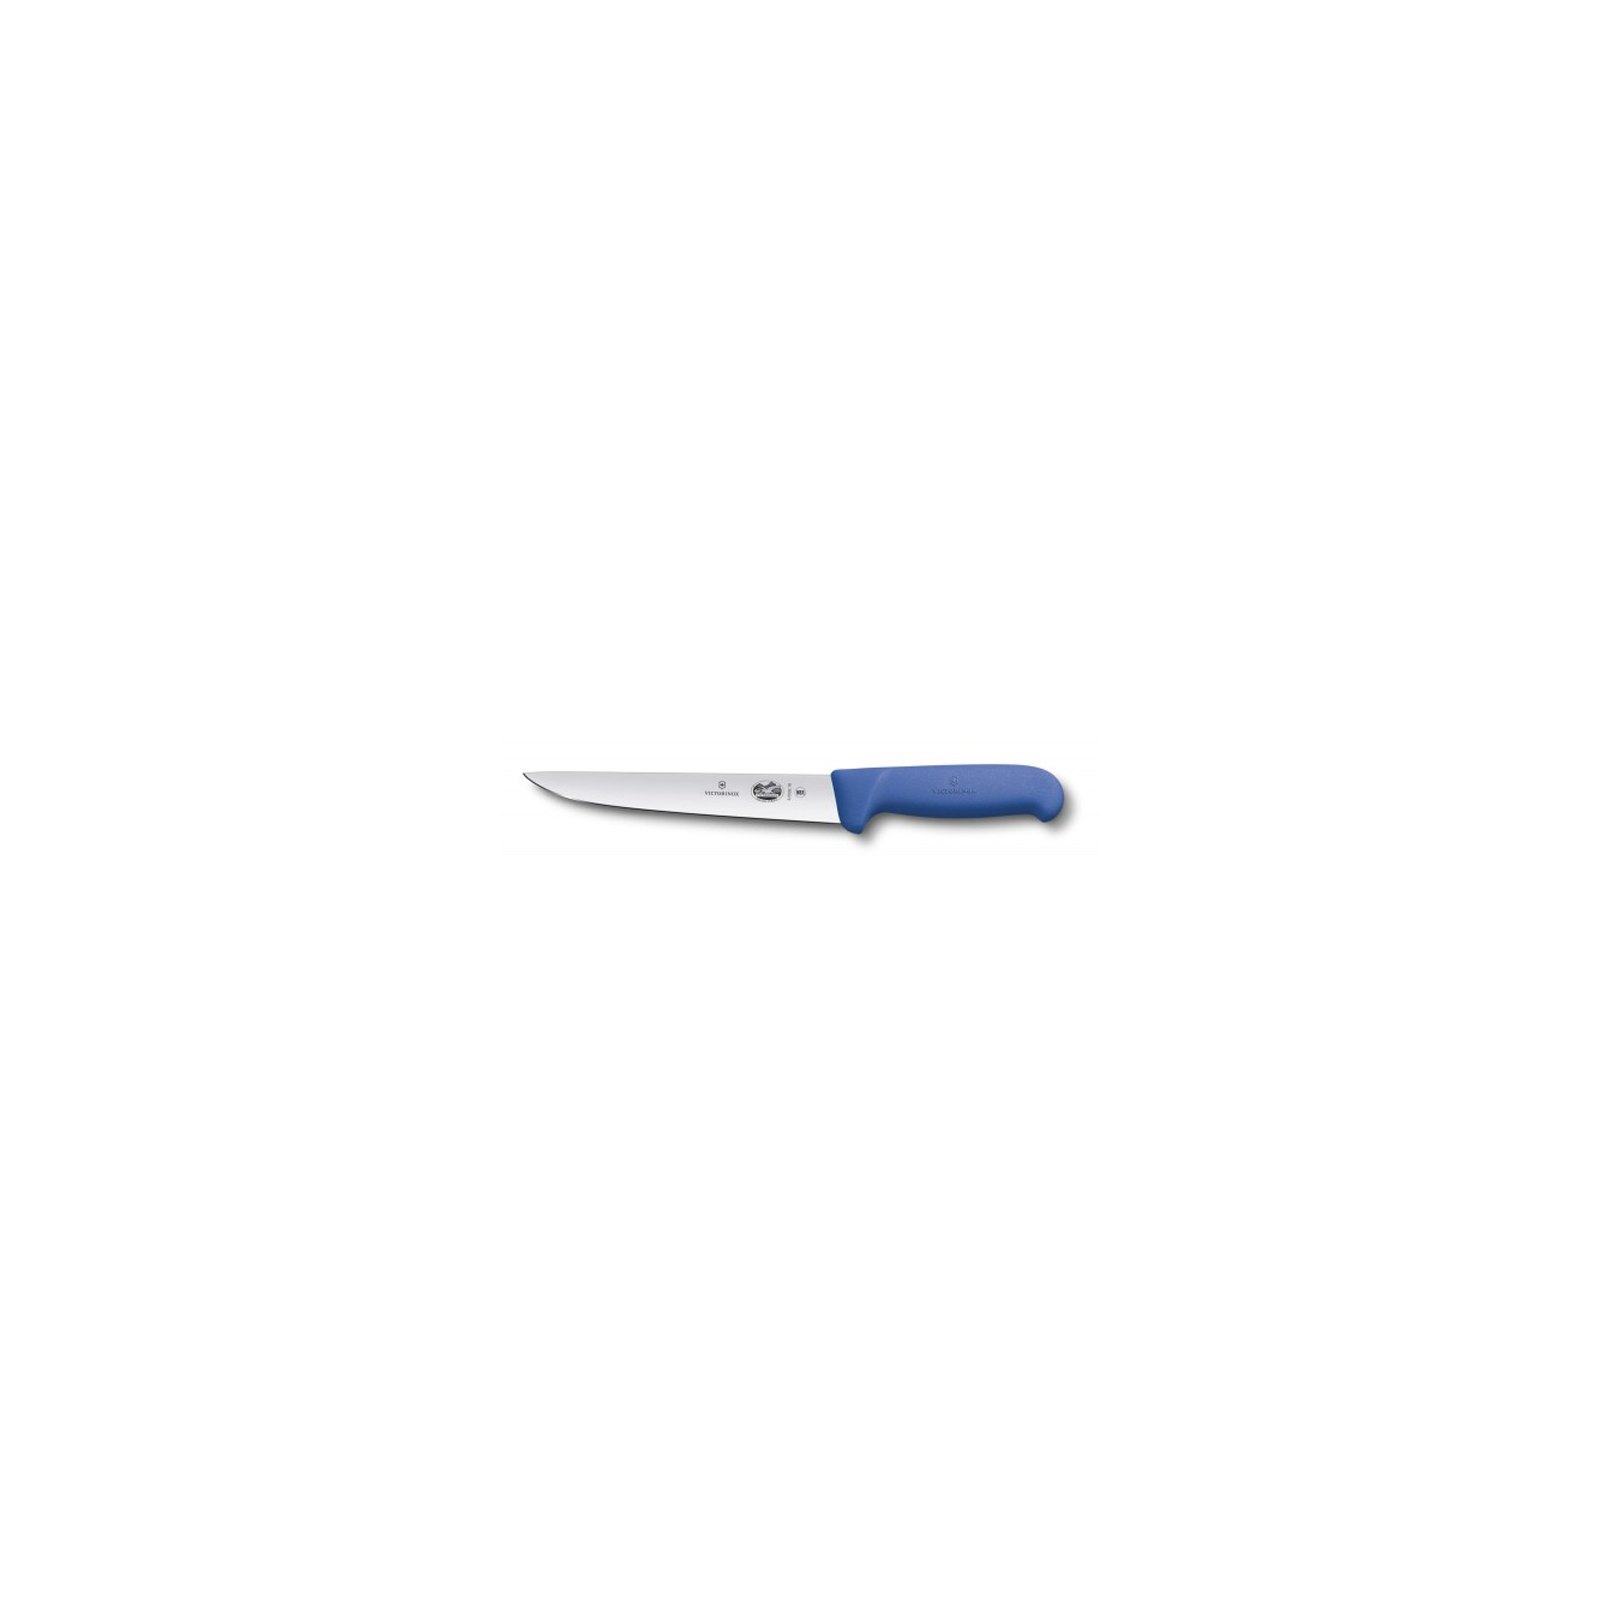 Кухонный нож Victorinox Fibrox обвалочный 18 см, синий (5.5502.18)